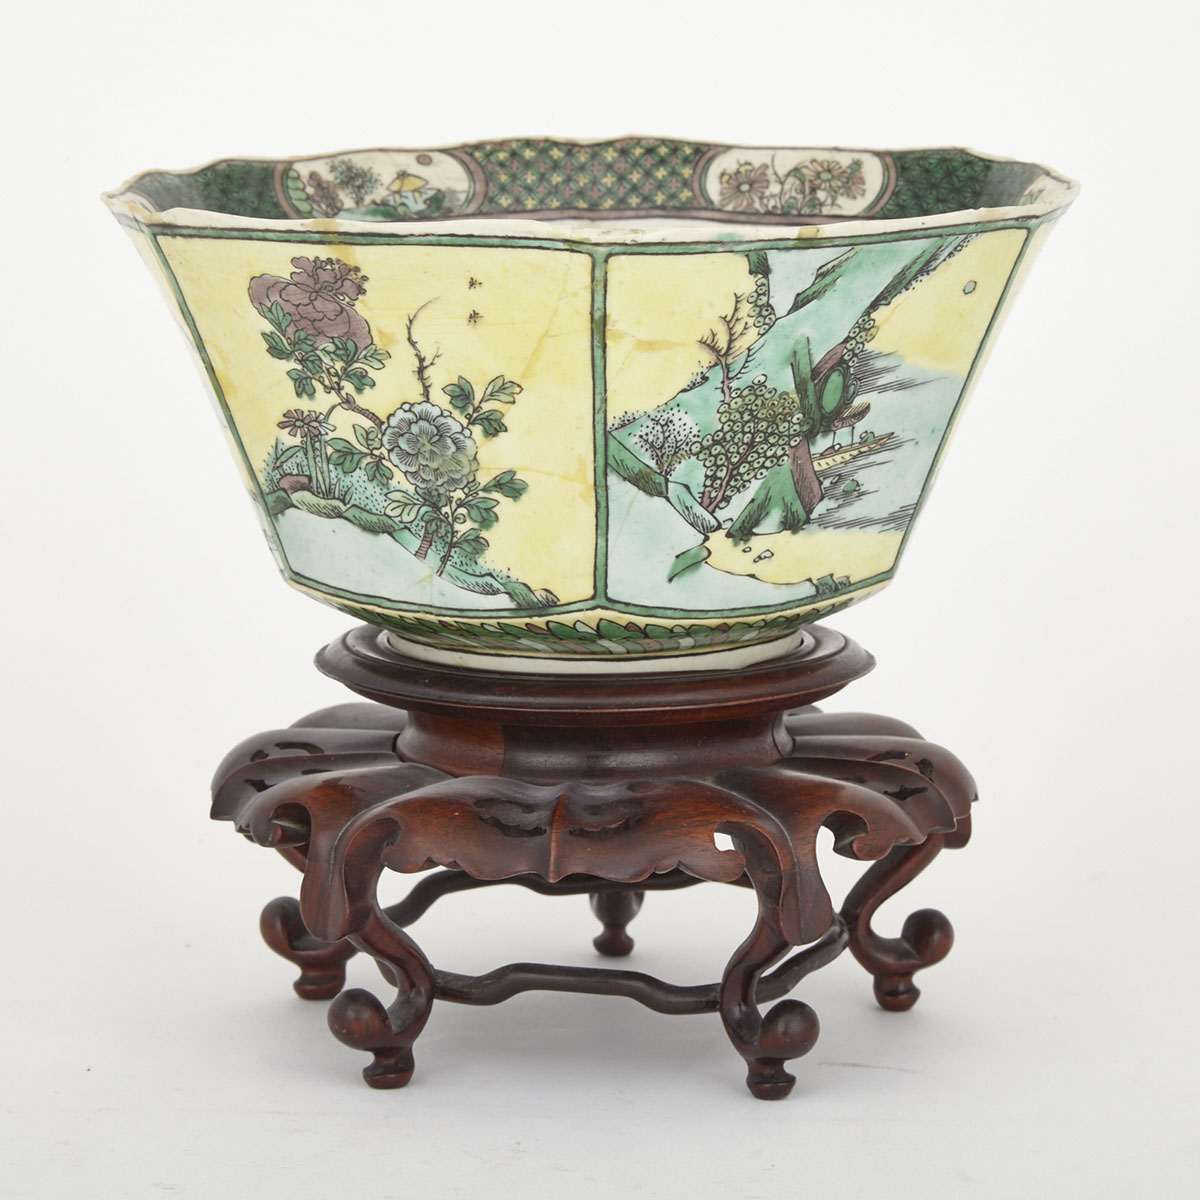 Kangxi Wucai Bowl, Mark and of the Period